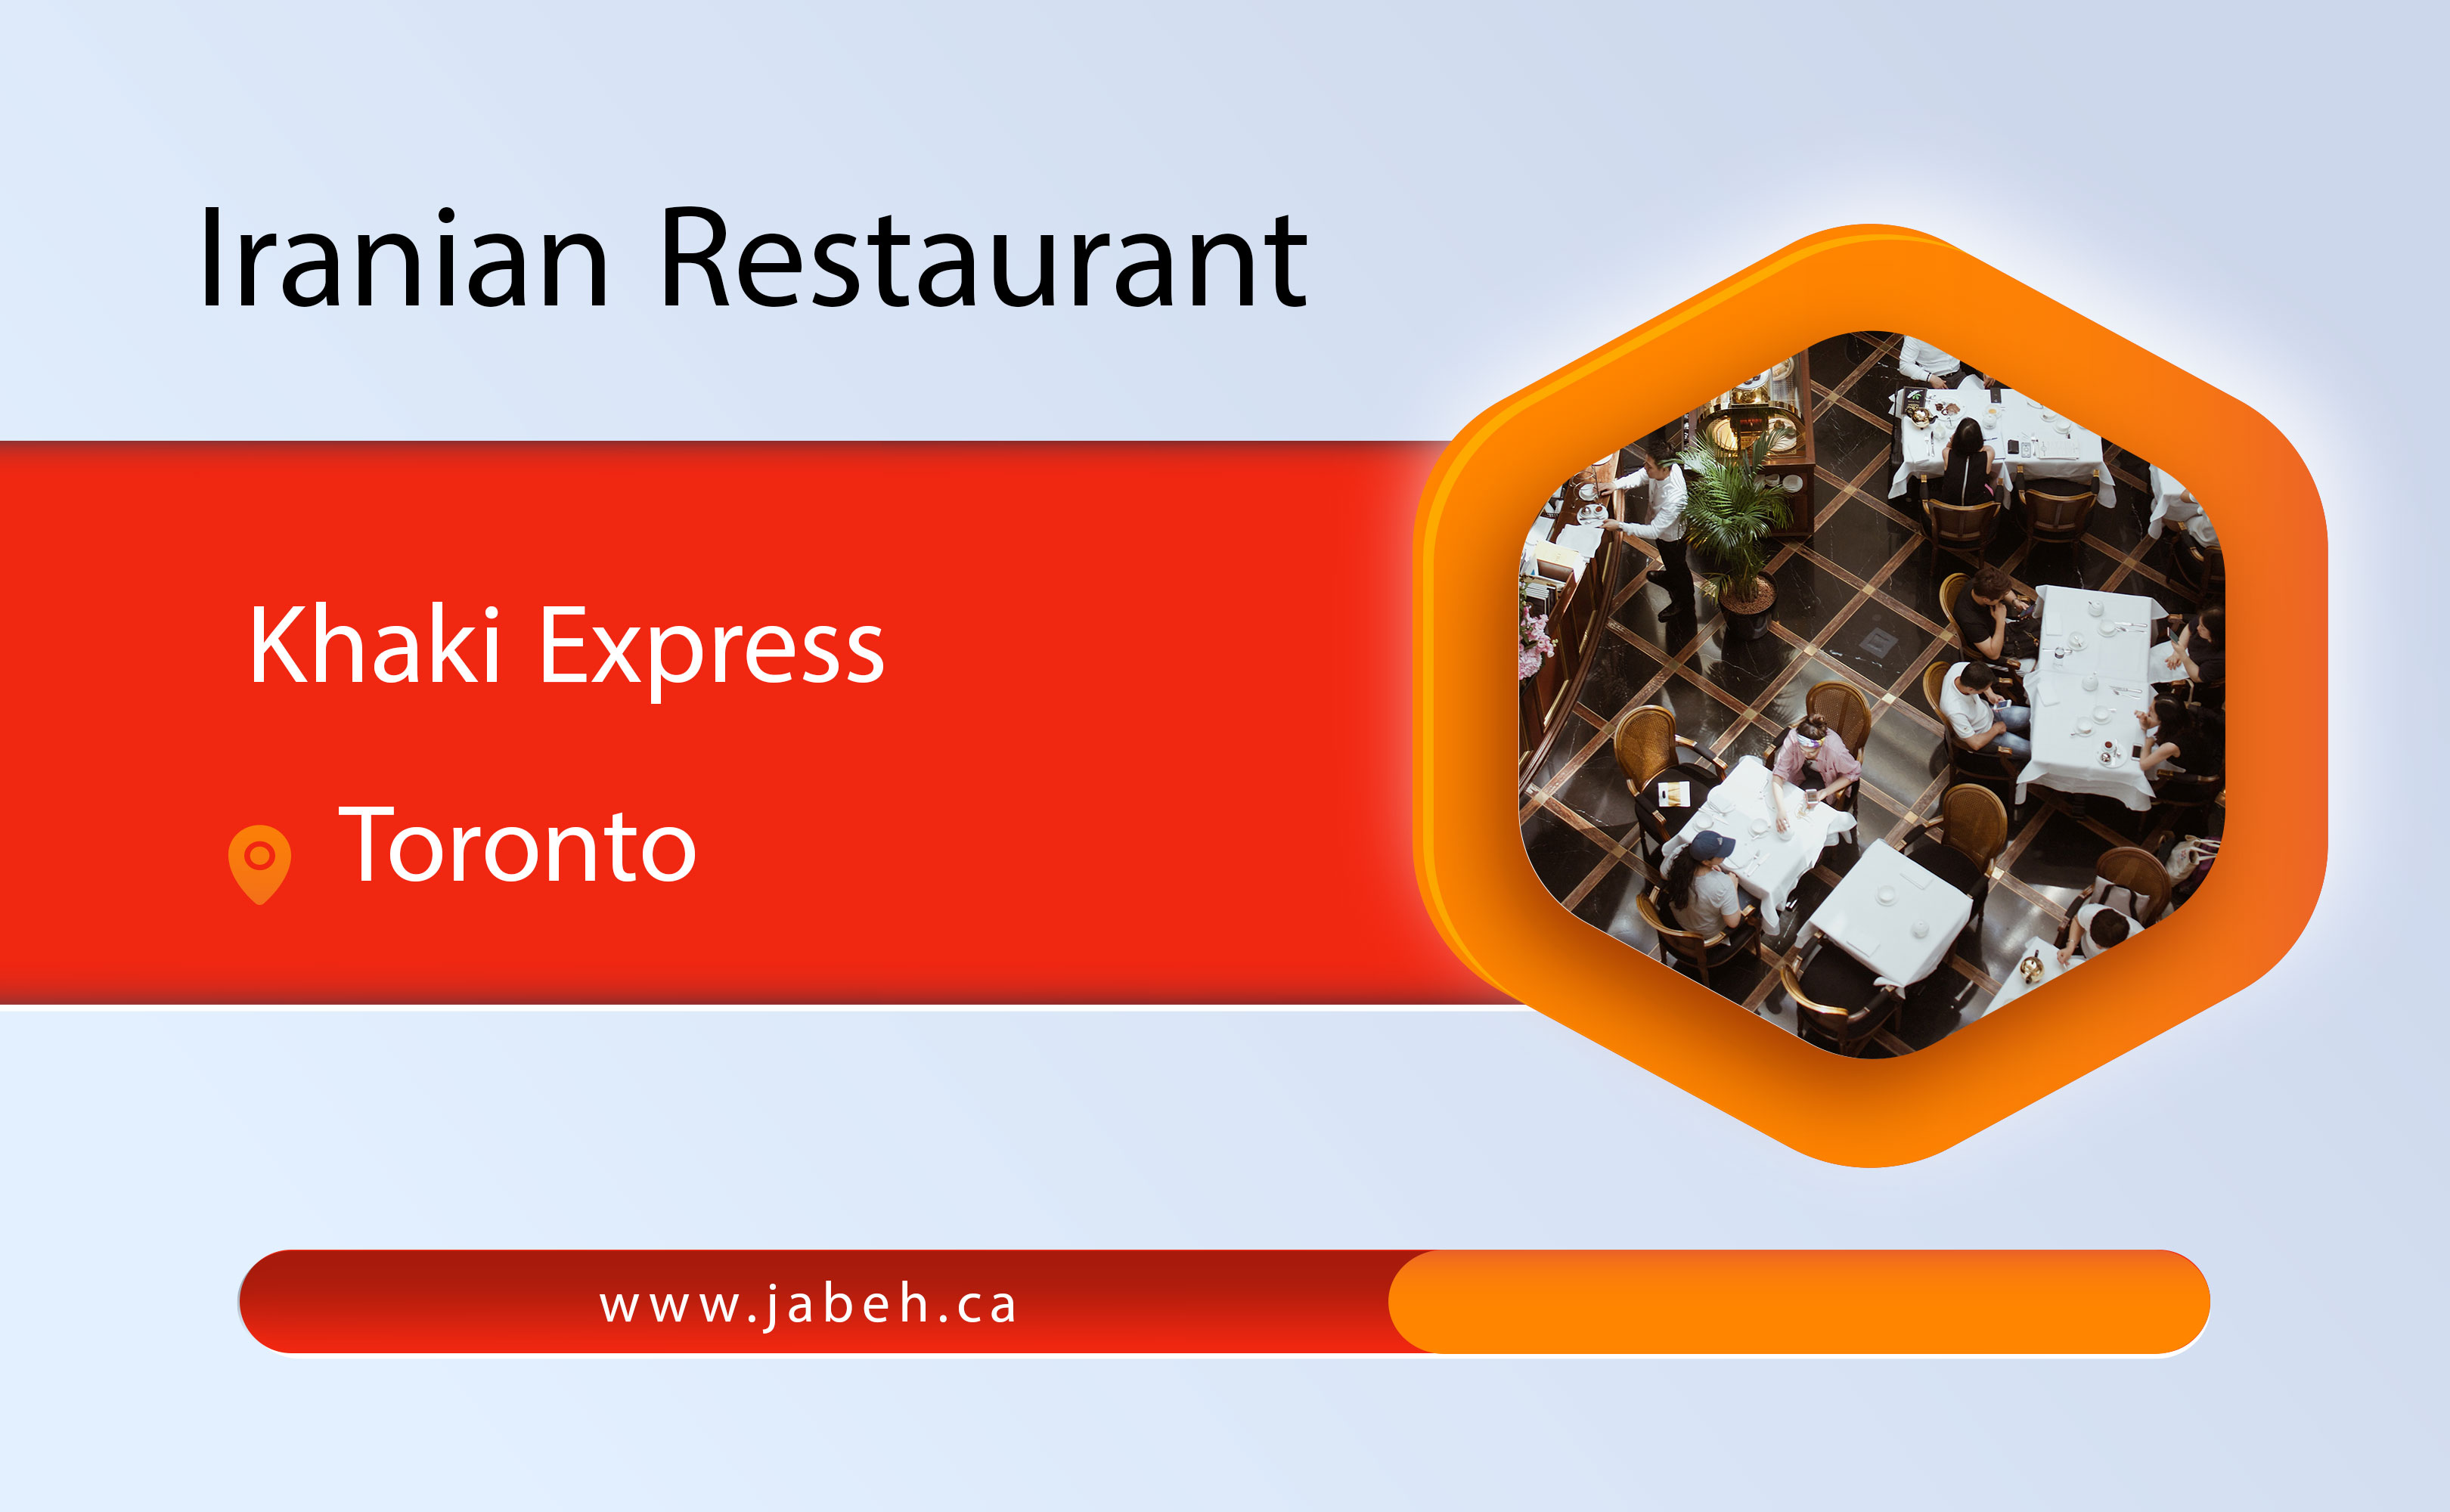 Khaki Express Iranian Restaurant in Richmond Hill